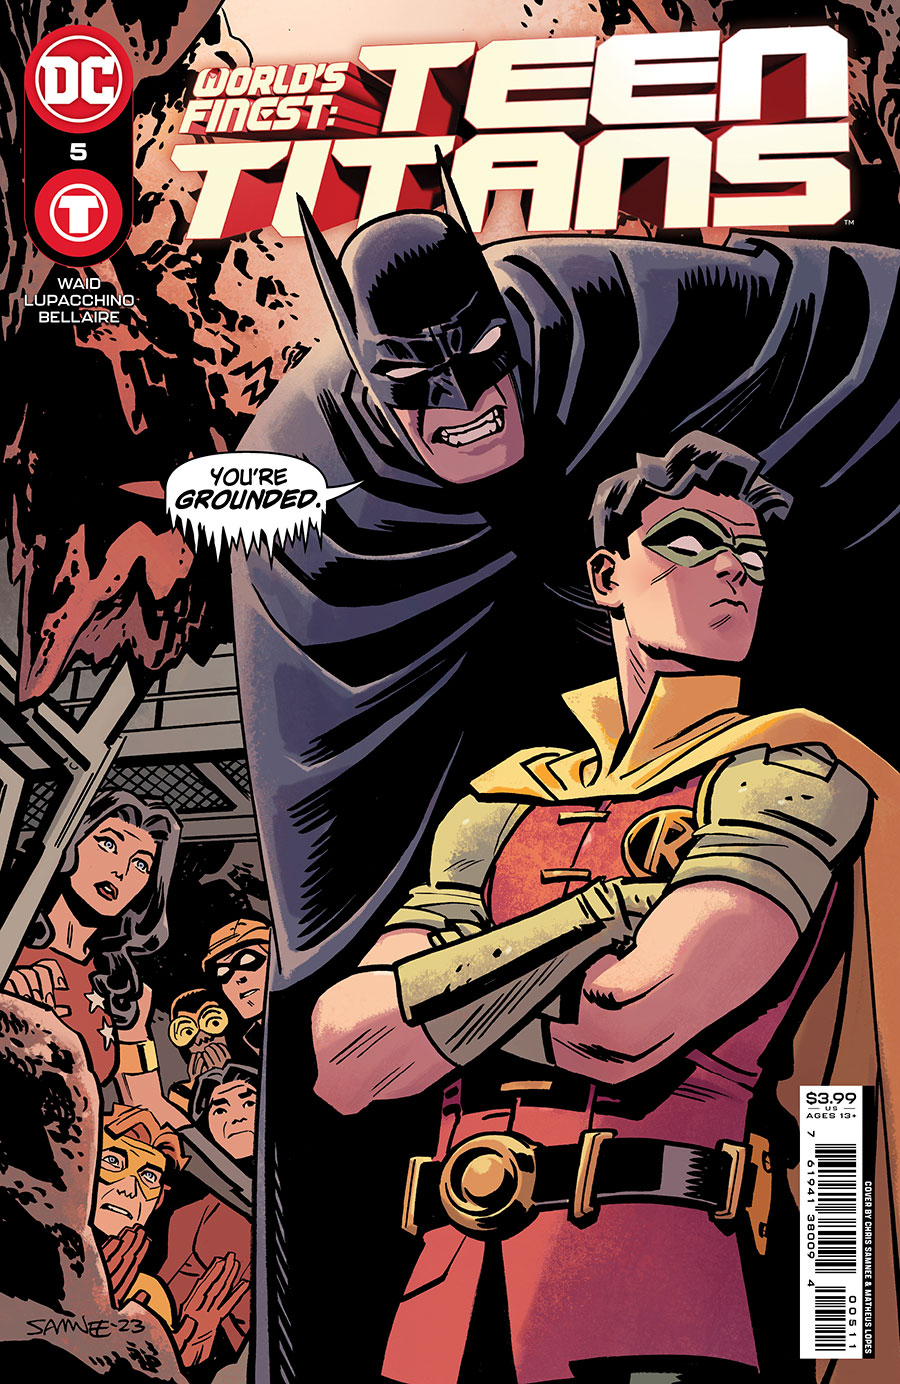 Worlds Finest Teen Titans #5 Cover A Regular Chris Samnee Cover